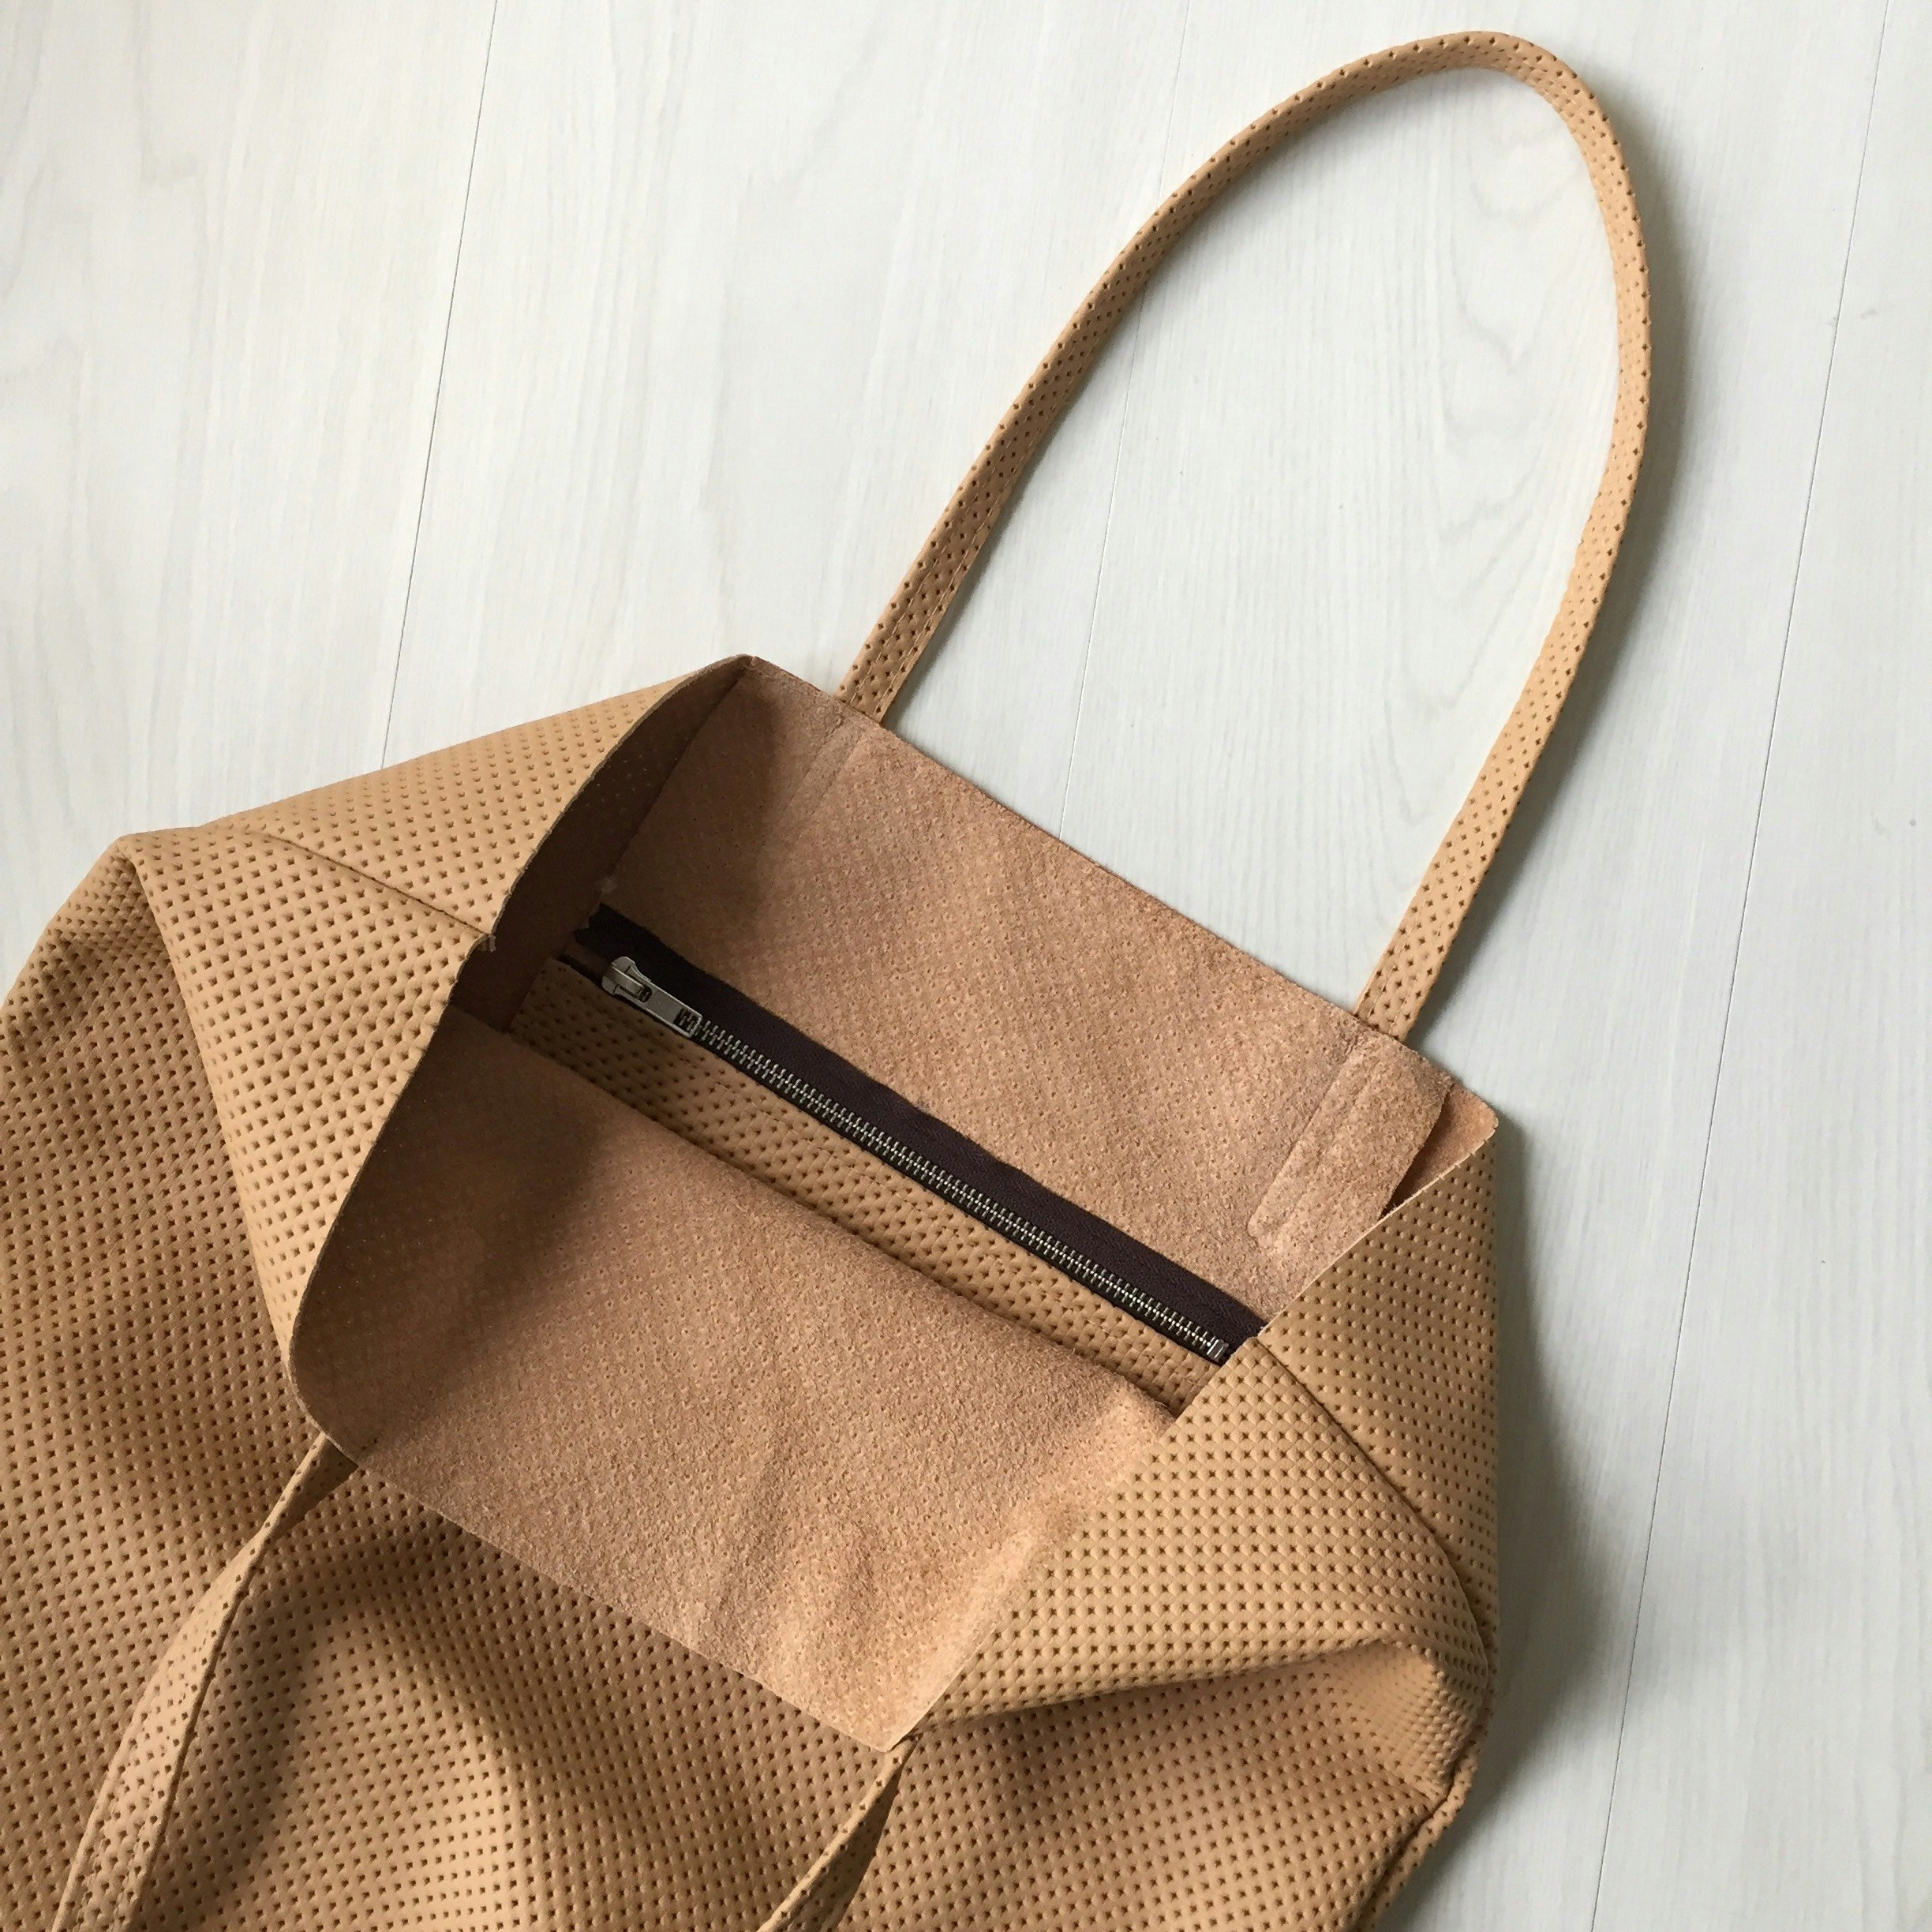 Raw Leather Tote Bag - Tan Perforated Leather - Sofia Agardtson Design.